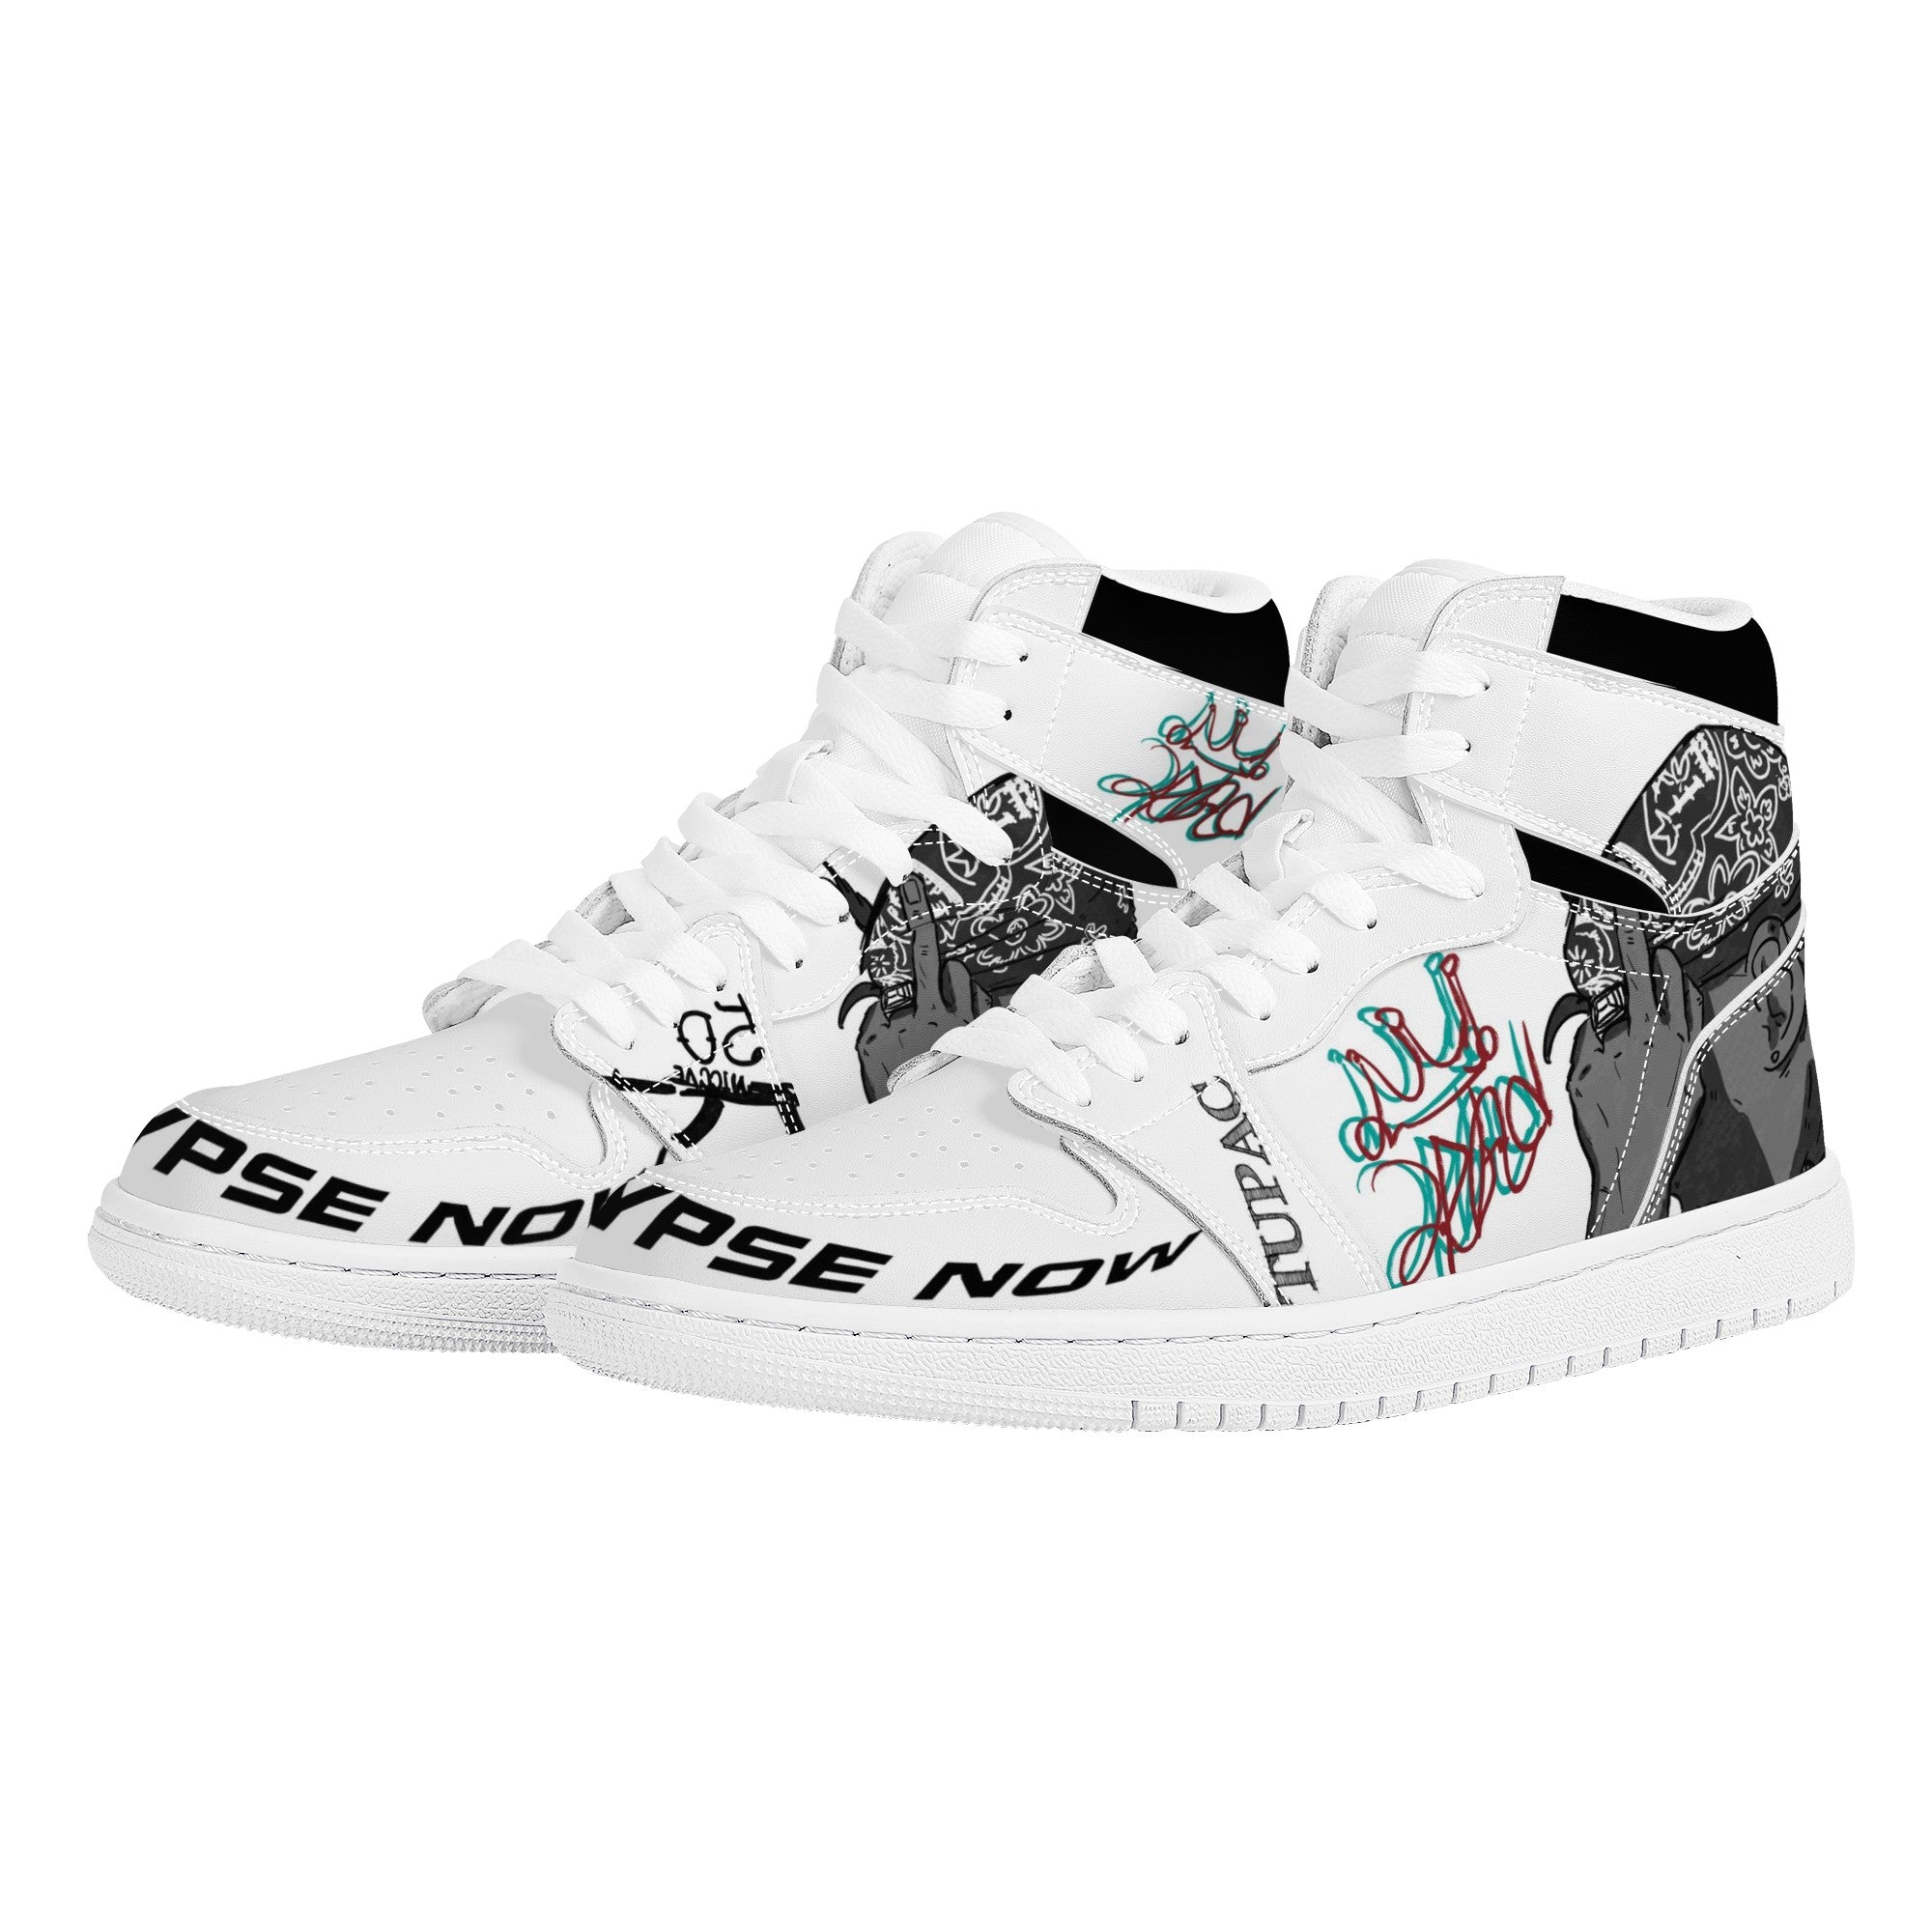 Tupac Shakur Custom Nike Air Jordan 1 Leather Sneaker